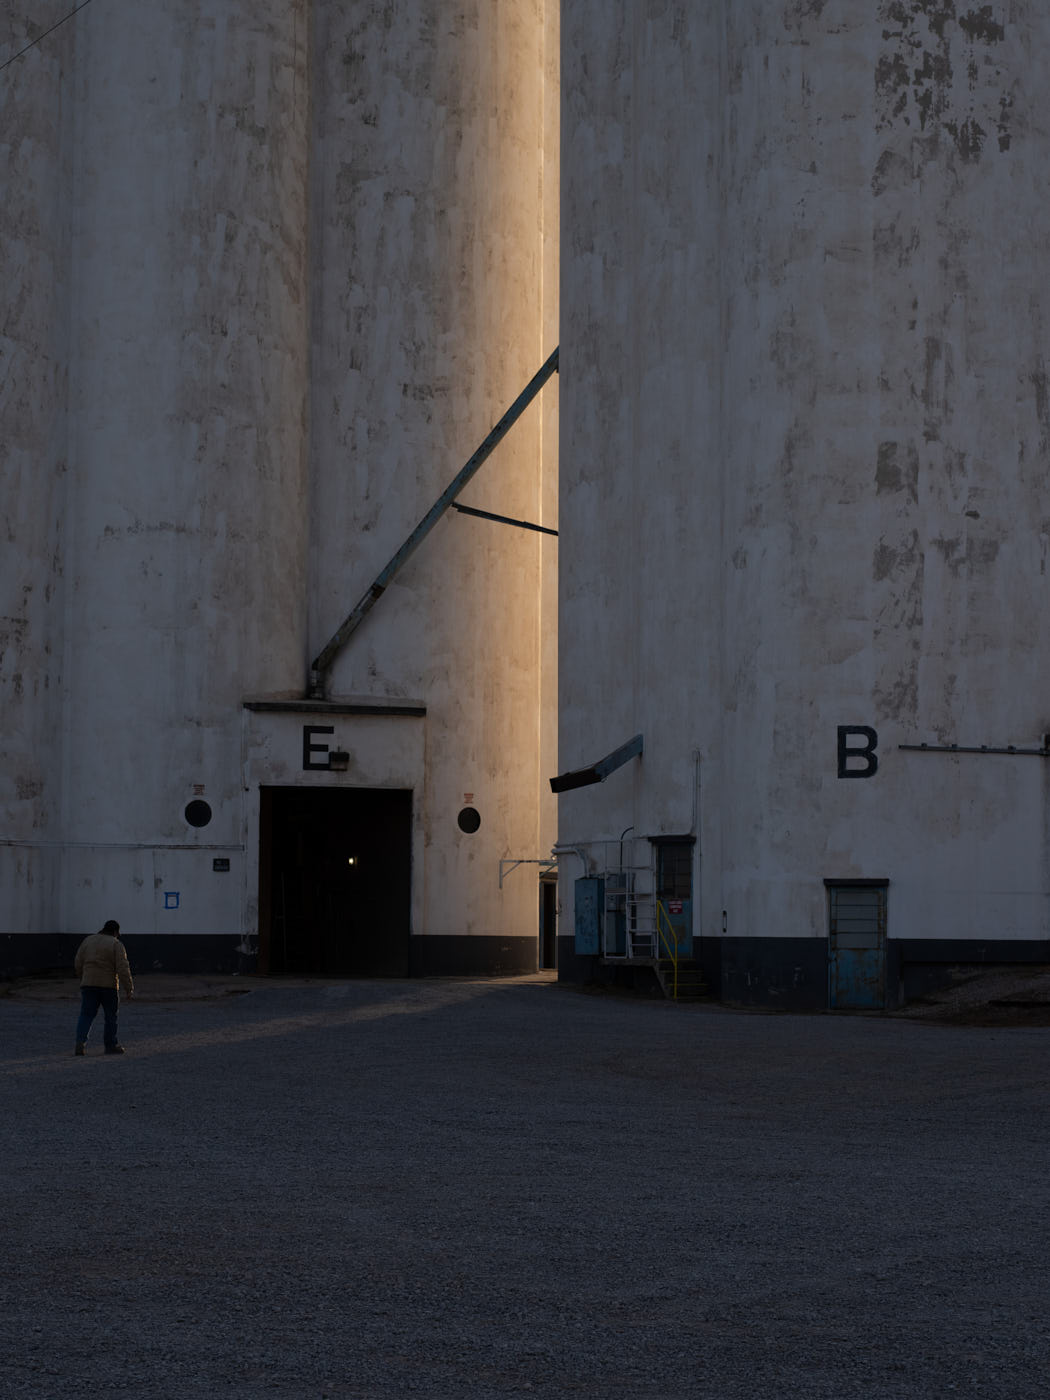 01-man-walks-near-grain-silos